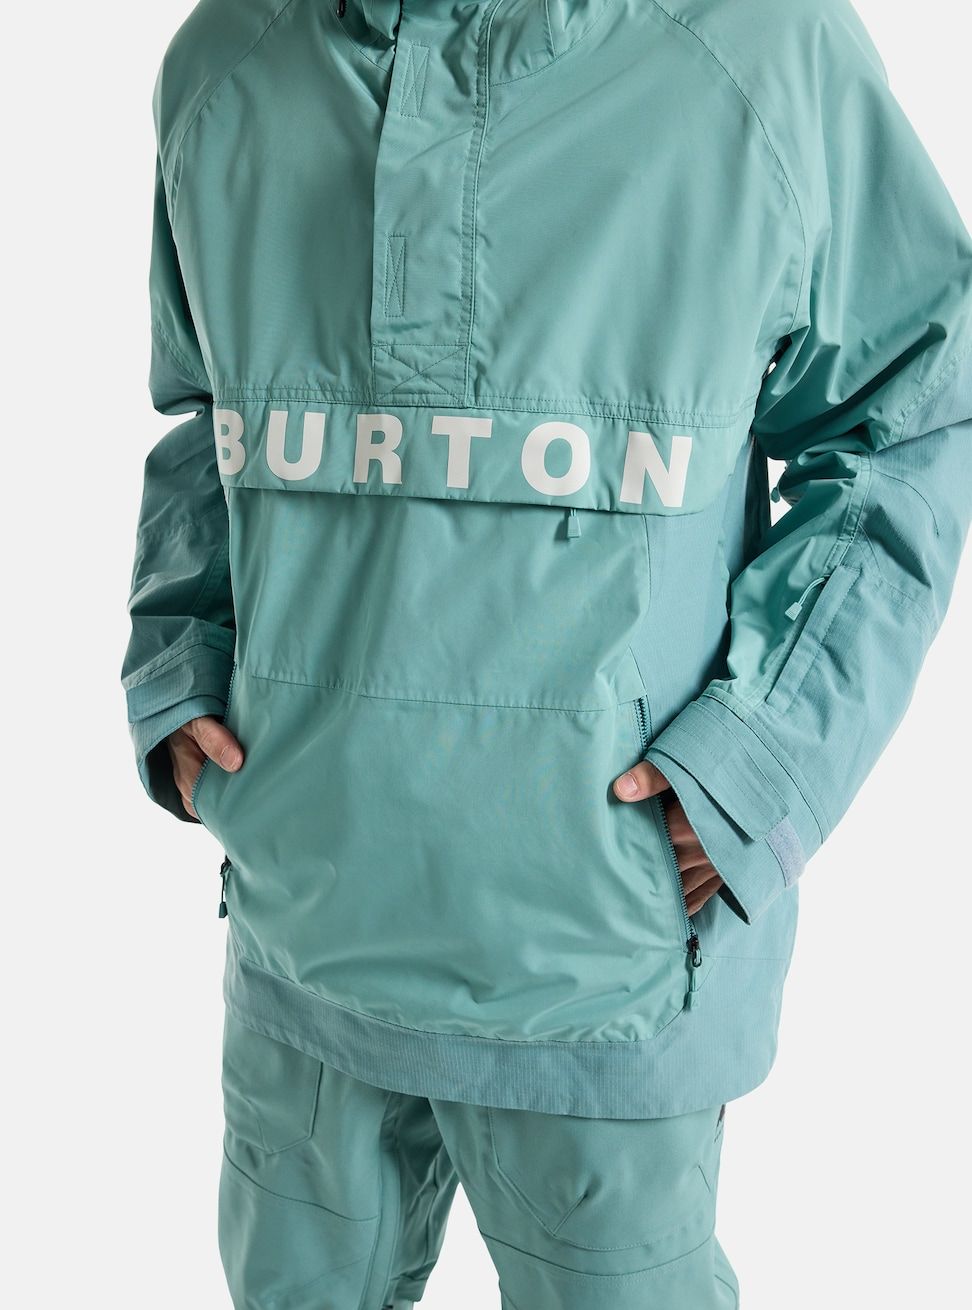 Men's Burton Frostner 2L Anorak Jacket True Black - Burton Snow Jackets